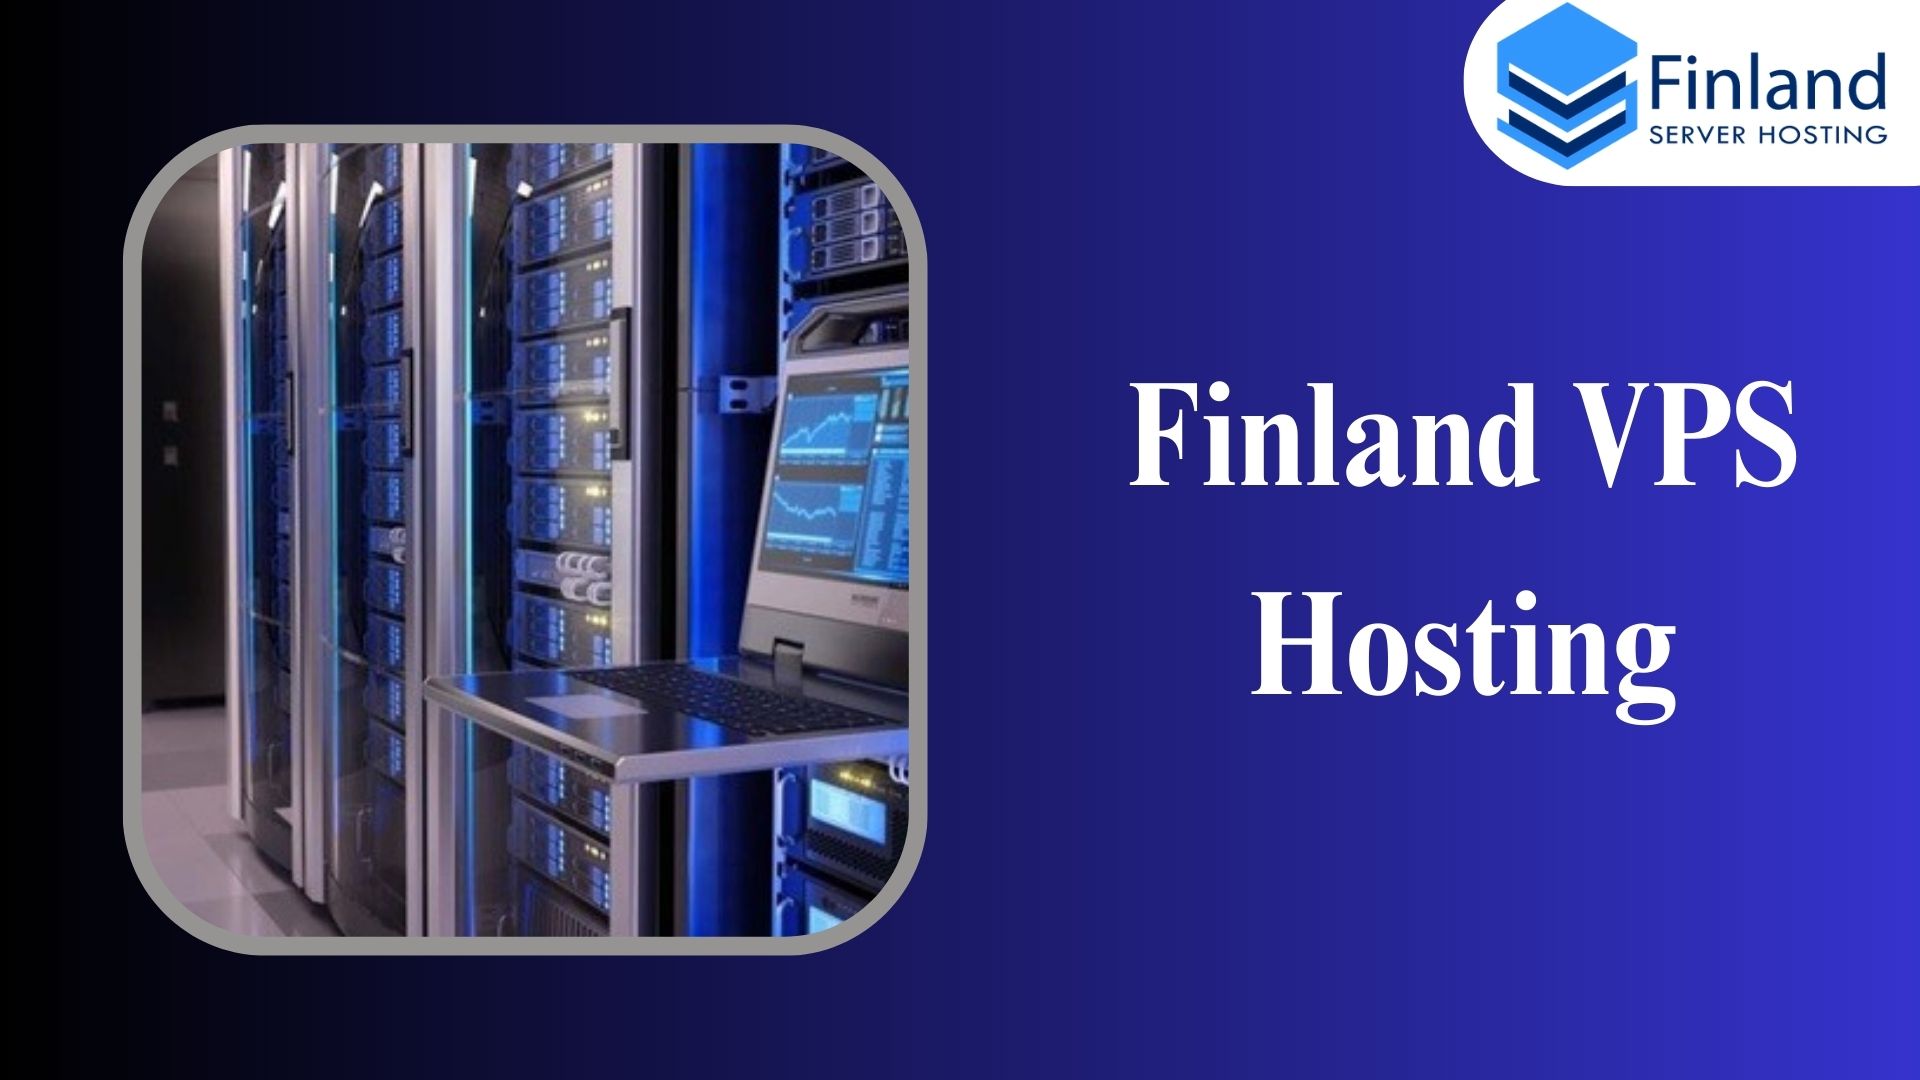 Finland VPS Hosting